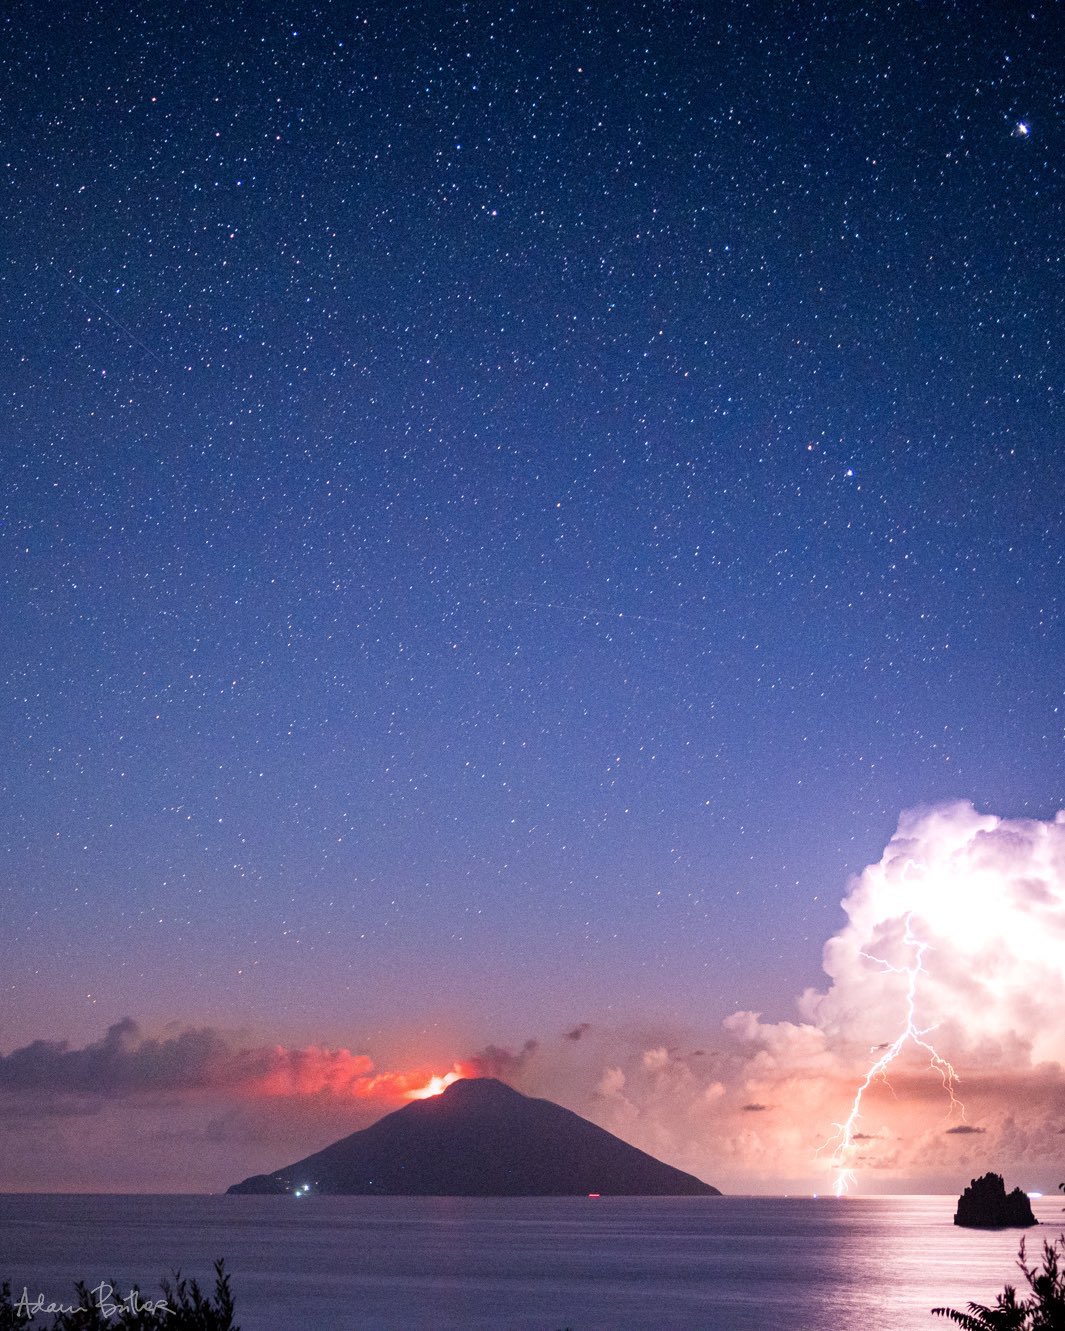 1st Place A terrific thunderstorm beside the erupting volcanic island of Stromboli, off Sicily by Adam Butler @adambutler65